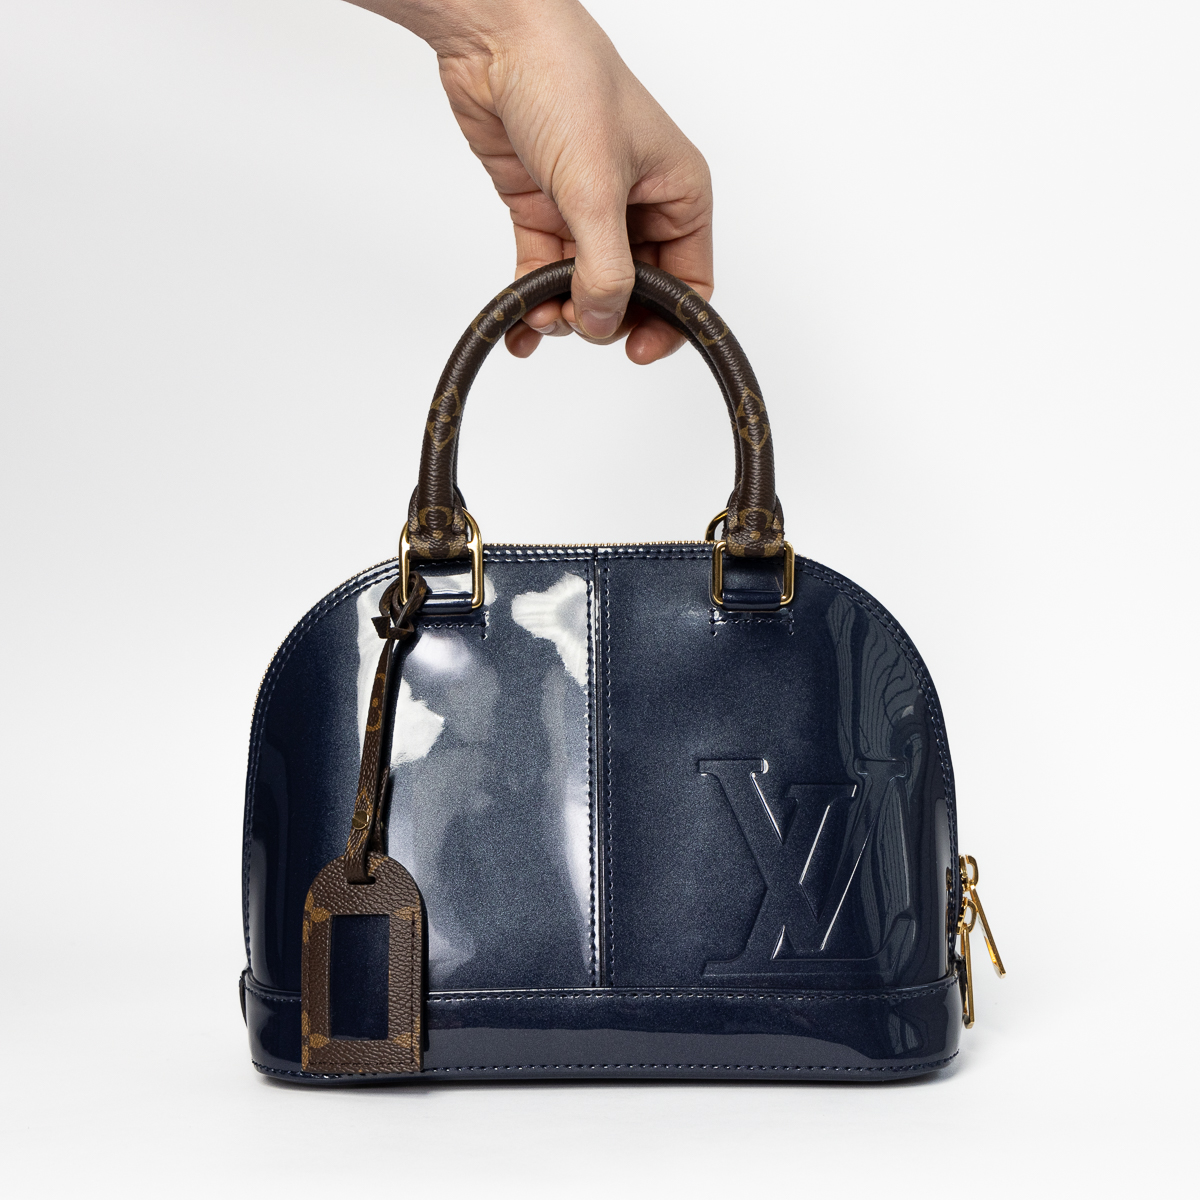 Louis Vuitton Alma BB Vernis Lisse Blue with Monogram bag